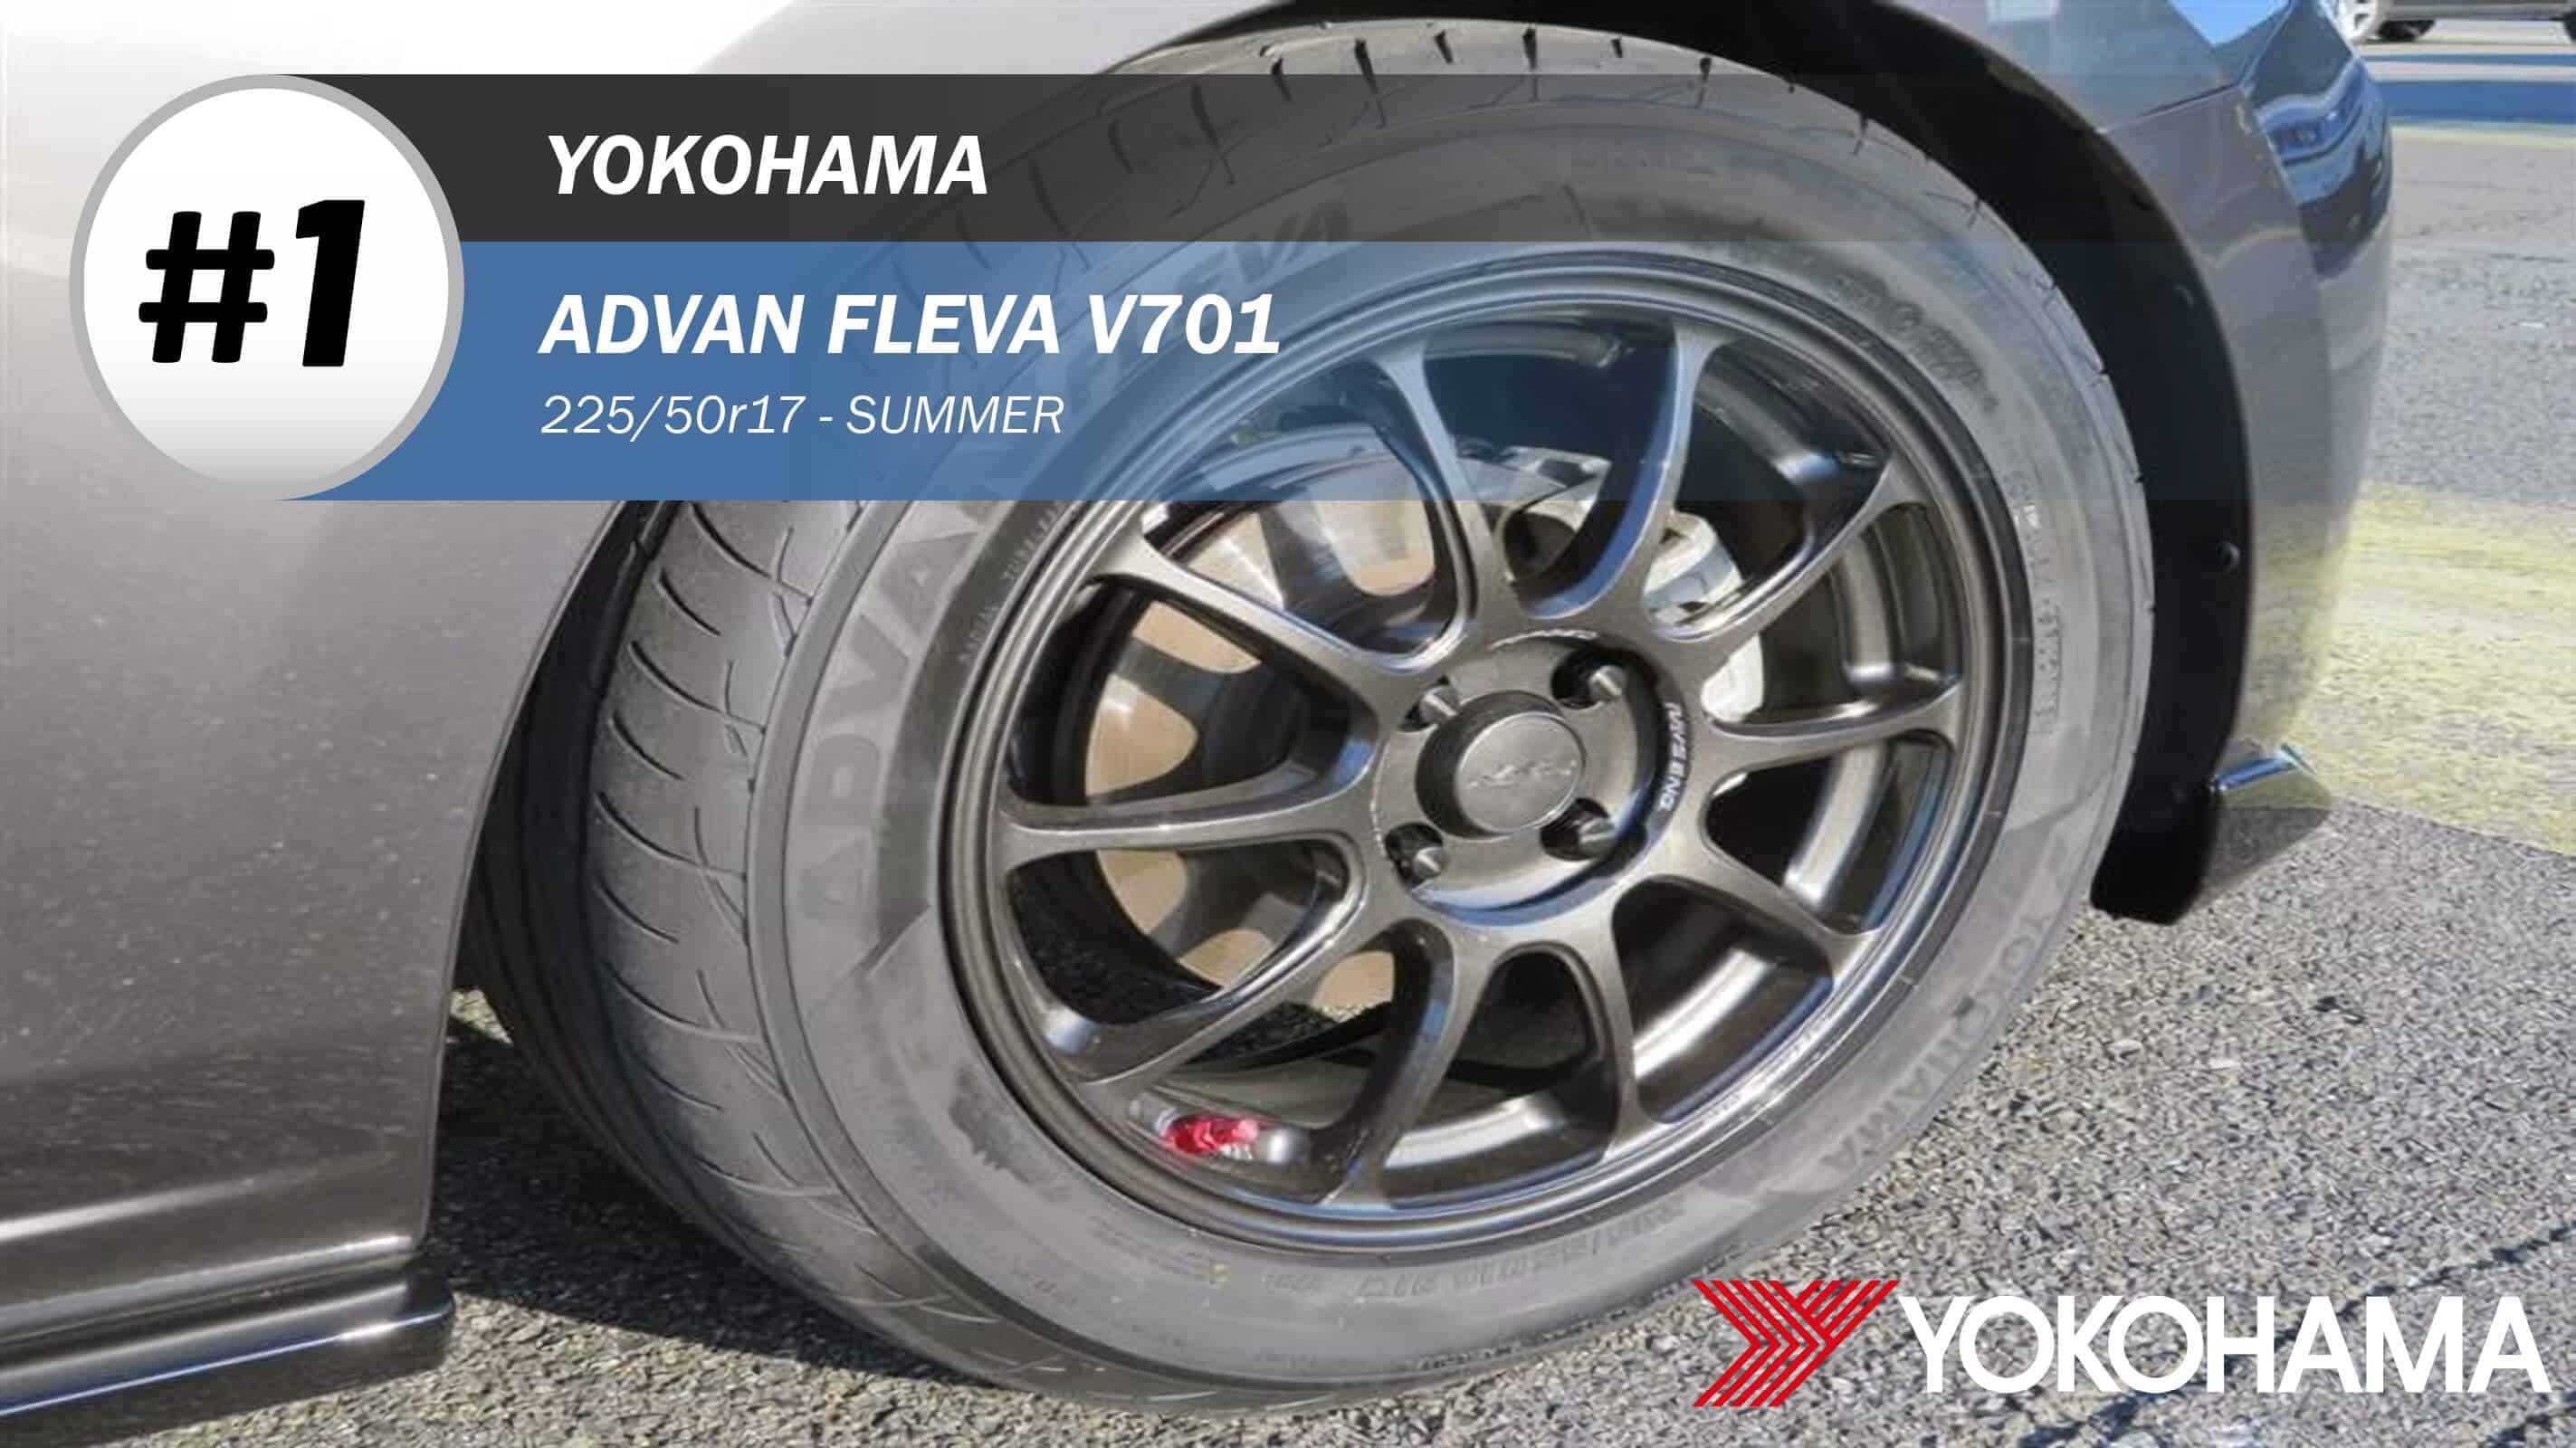 Top #1 Summer Tires: Yokohama Advan Fleva V701 – 225/50R17